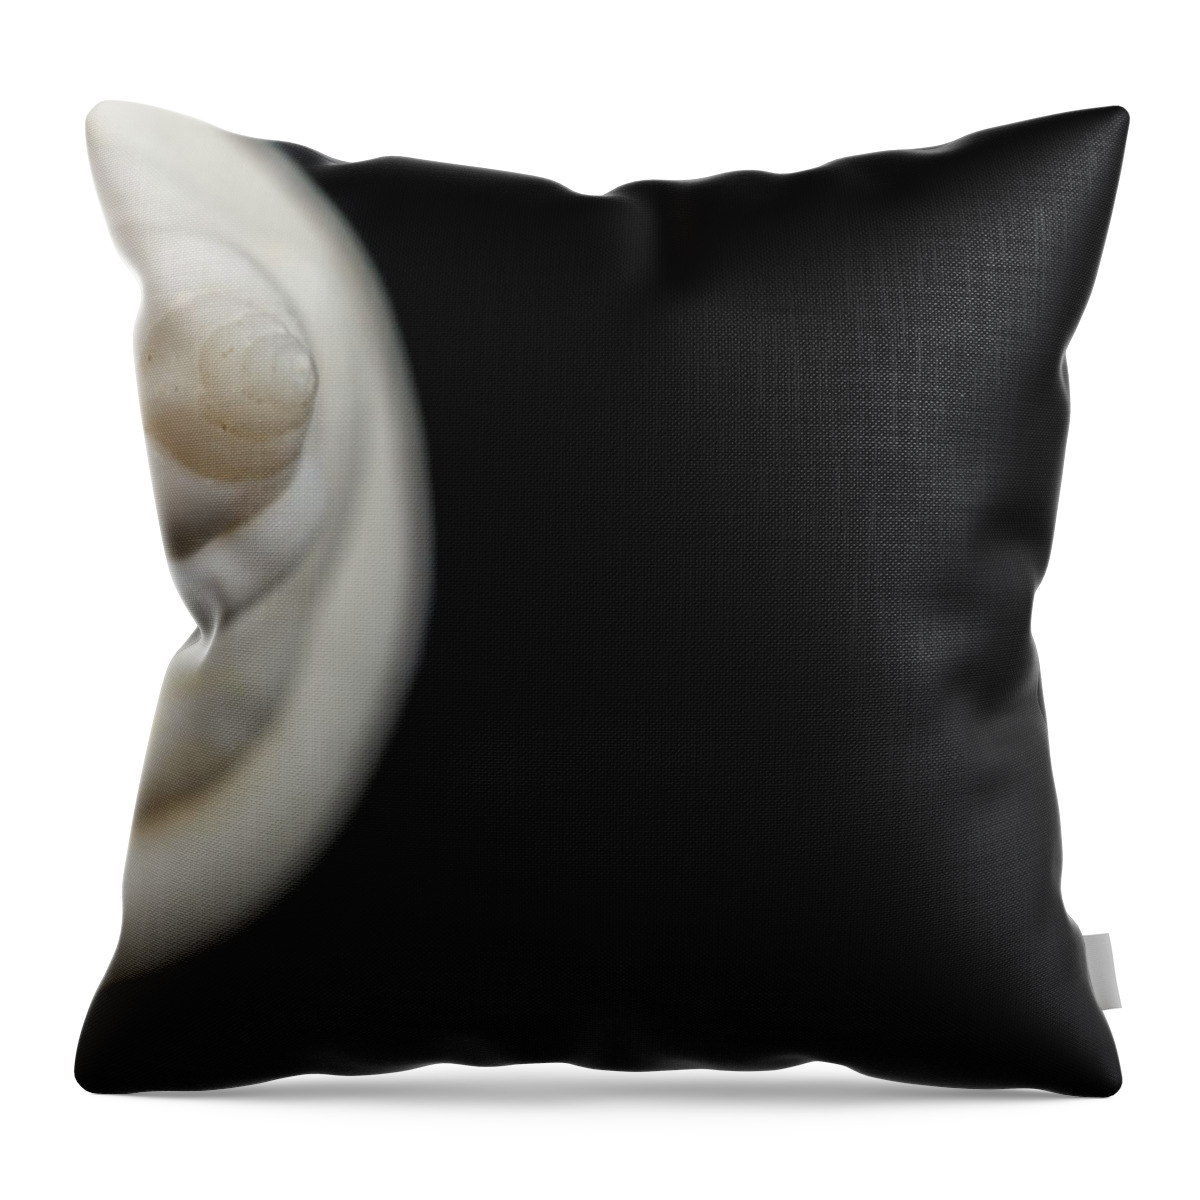 White Seashell Throw Pillow featuring the photograph Macro closeup of a Seashell #2 by John Williams